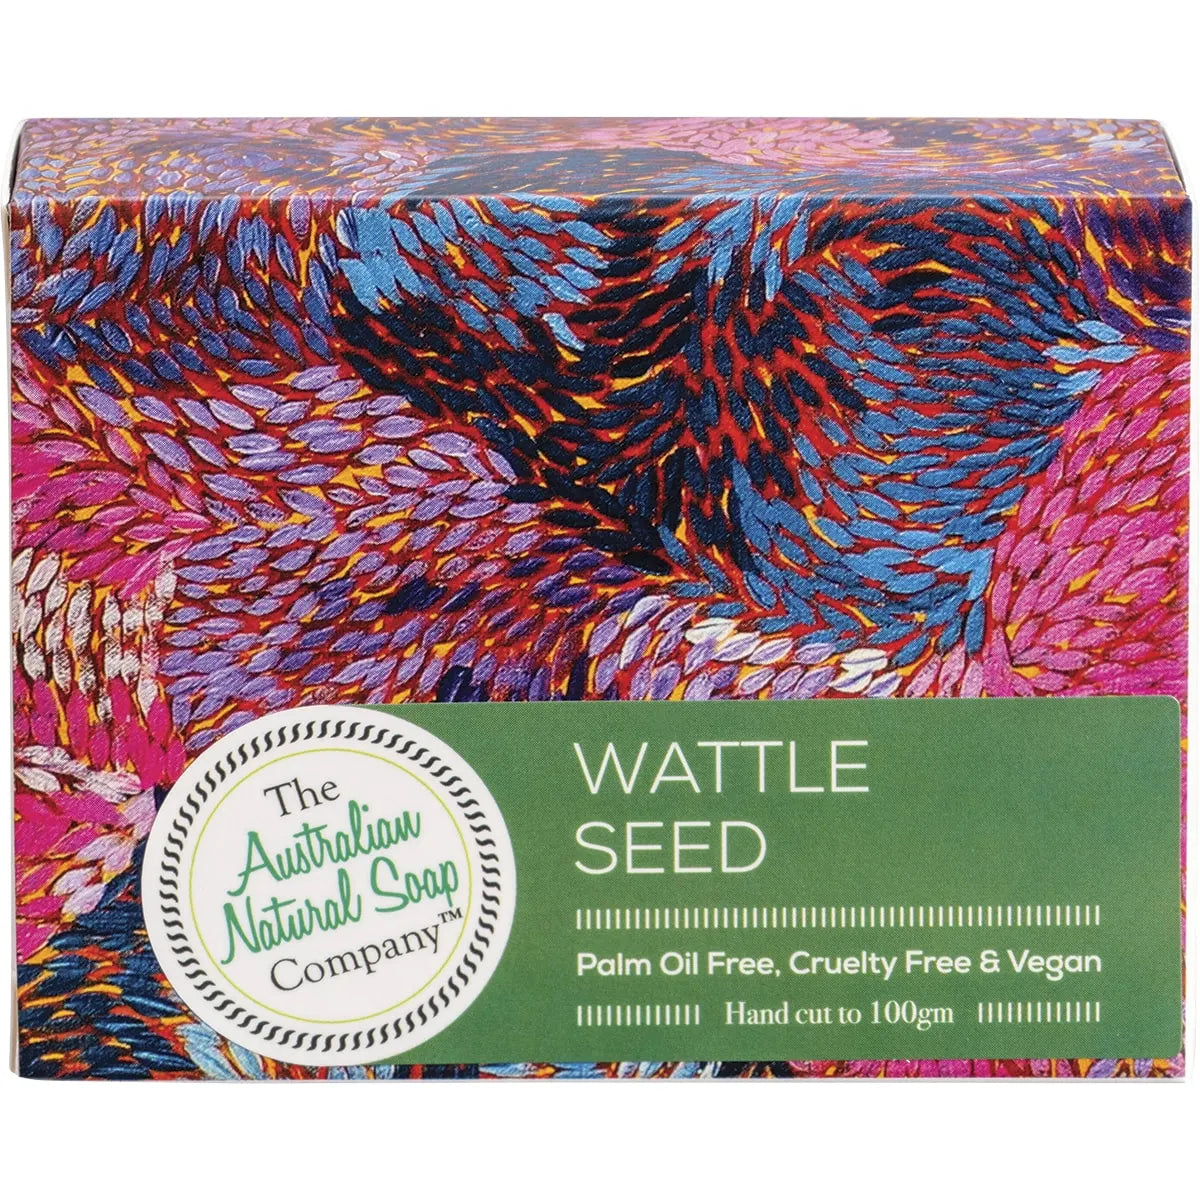 The Australian Natural Co Australian Bush Soap Wattle Seed 100g